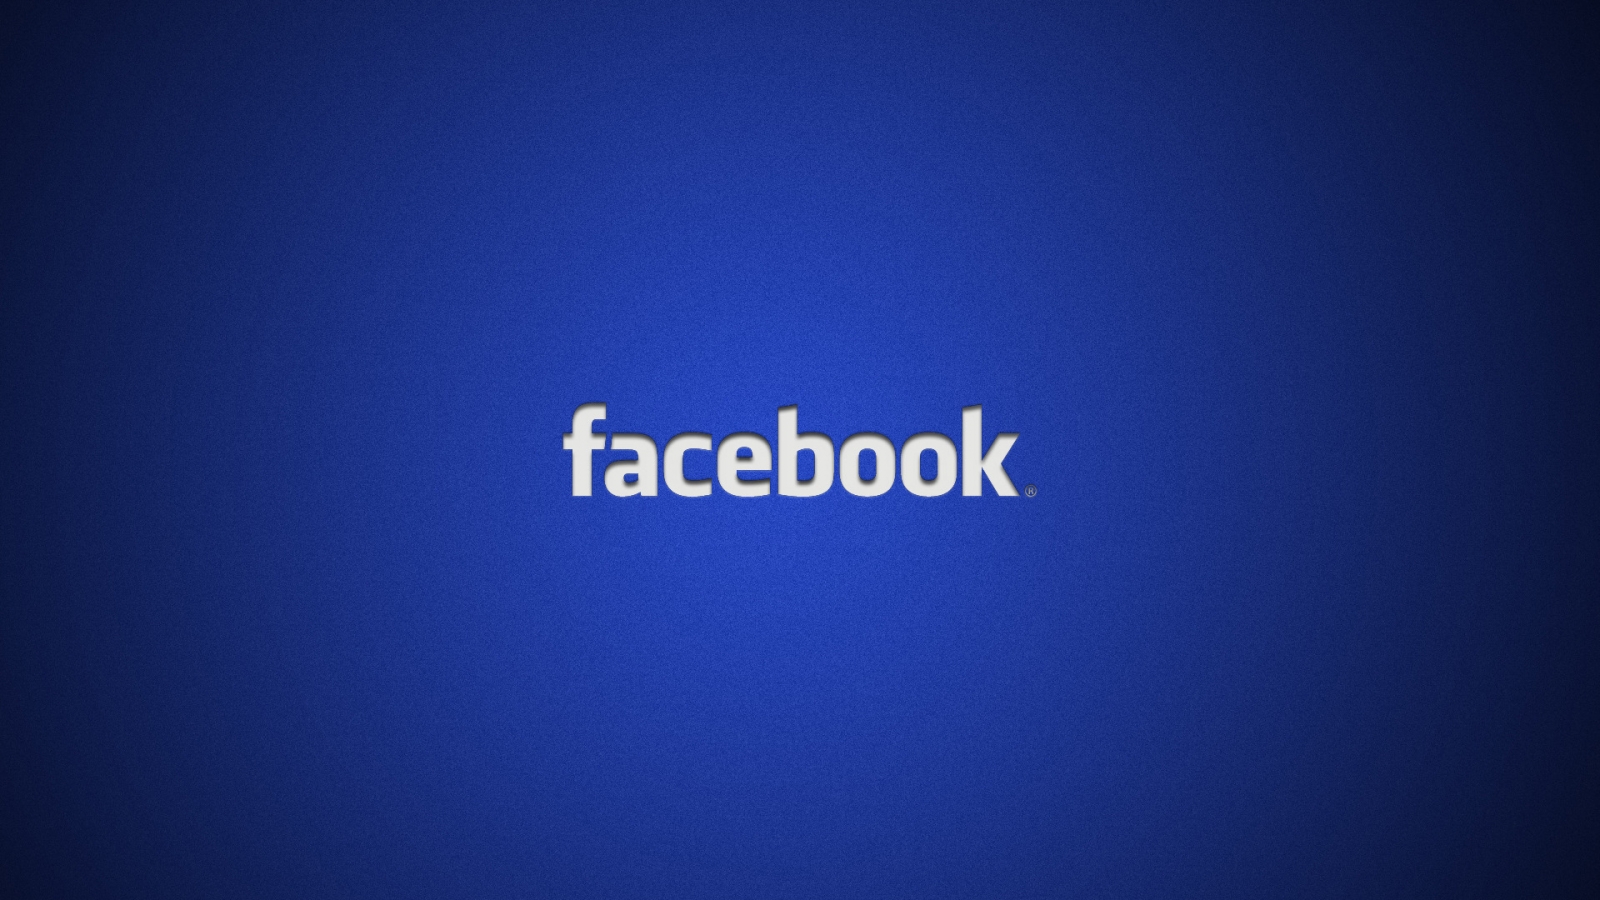 Facebook Logo for 1600 x 900 HDTV resolution